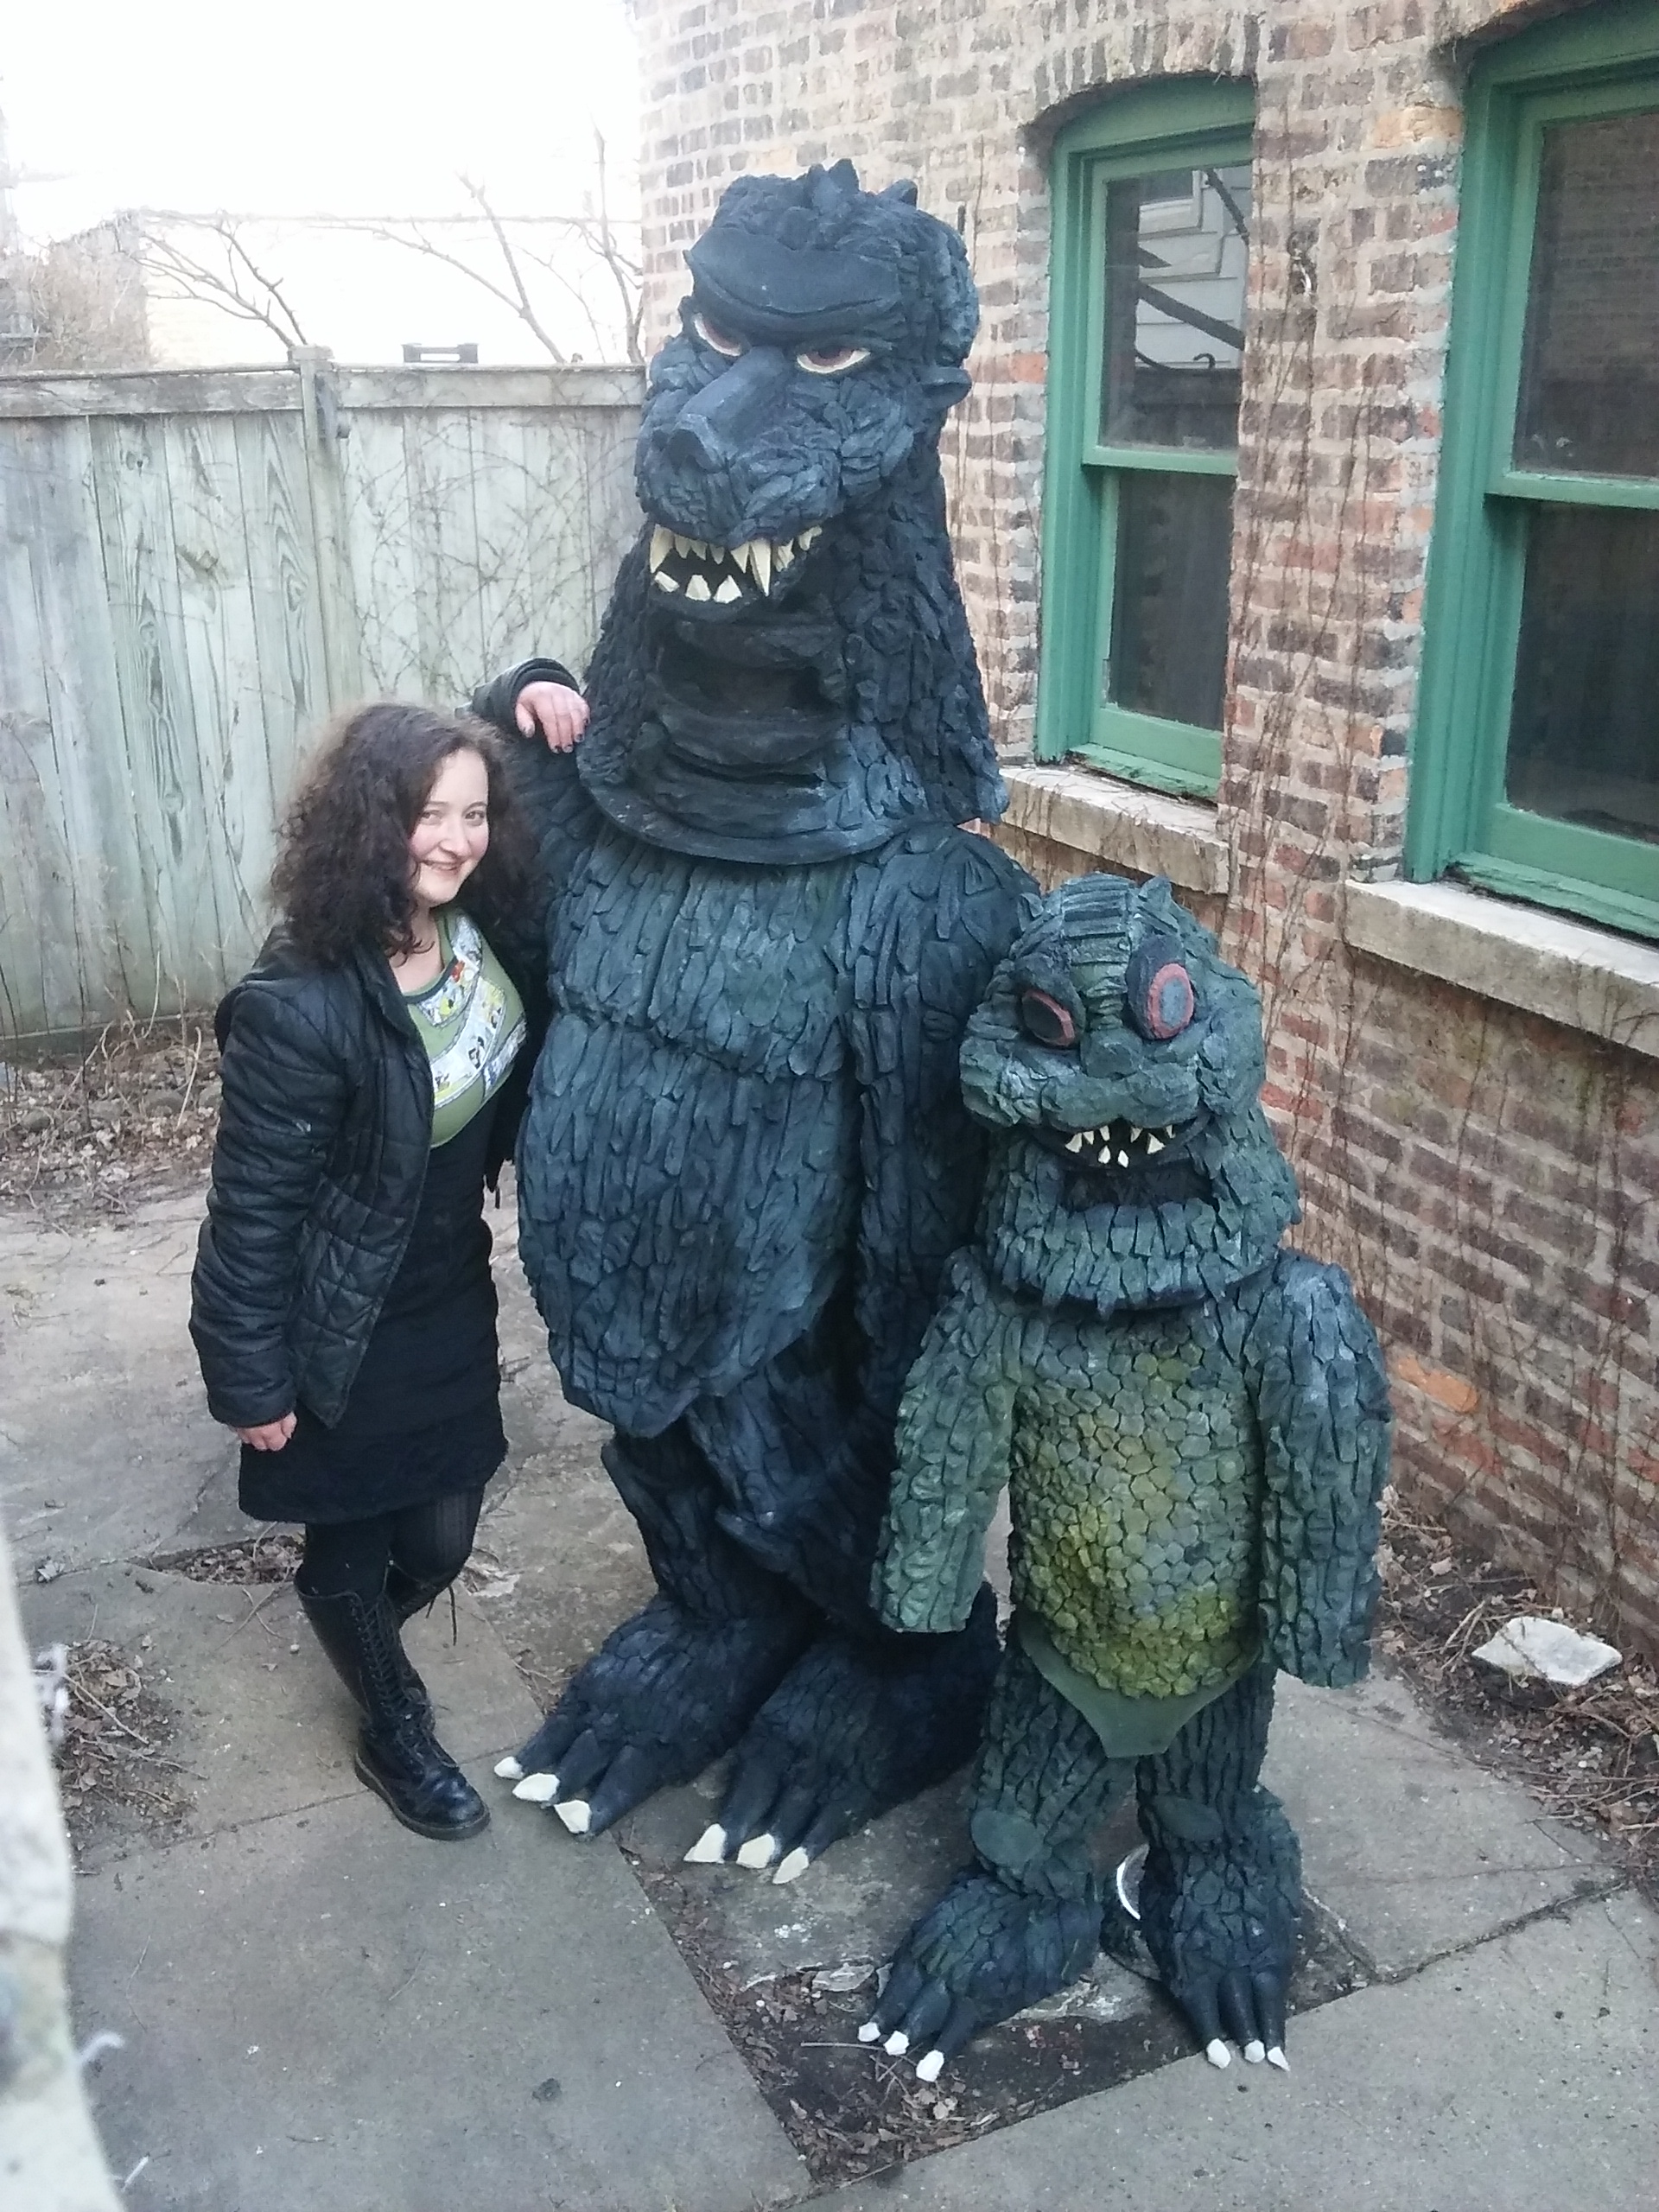 Godzilla and baby godzilla